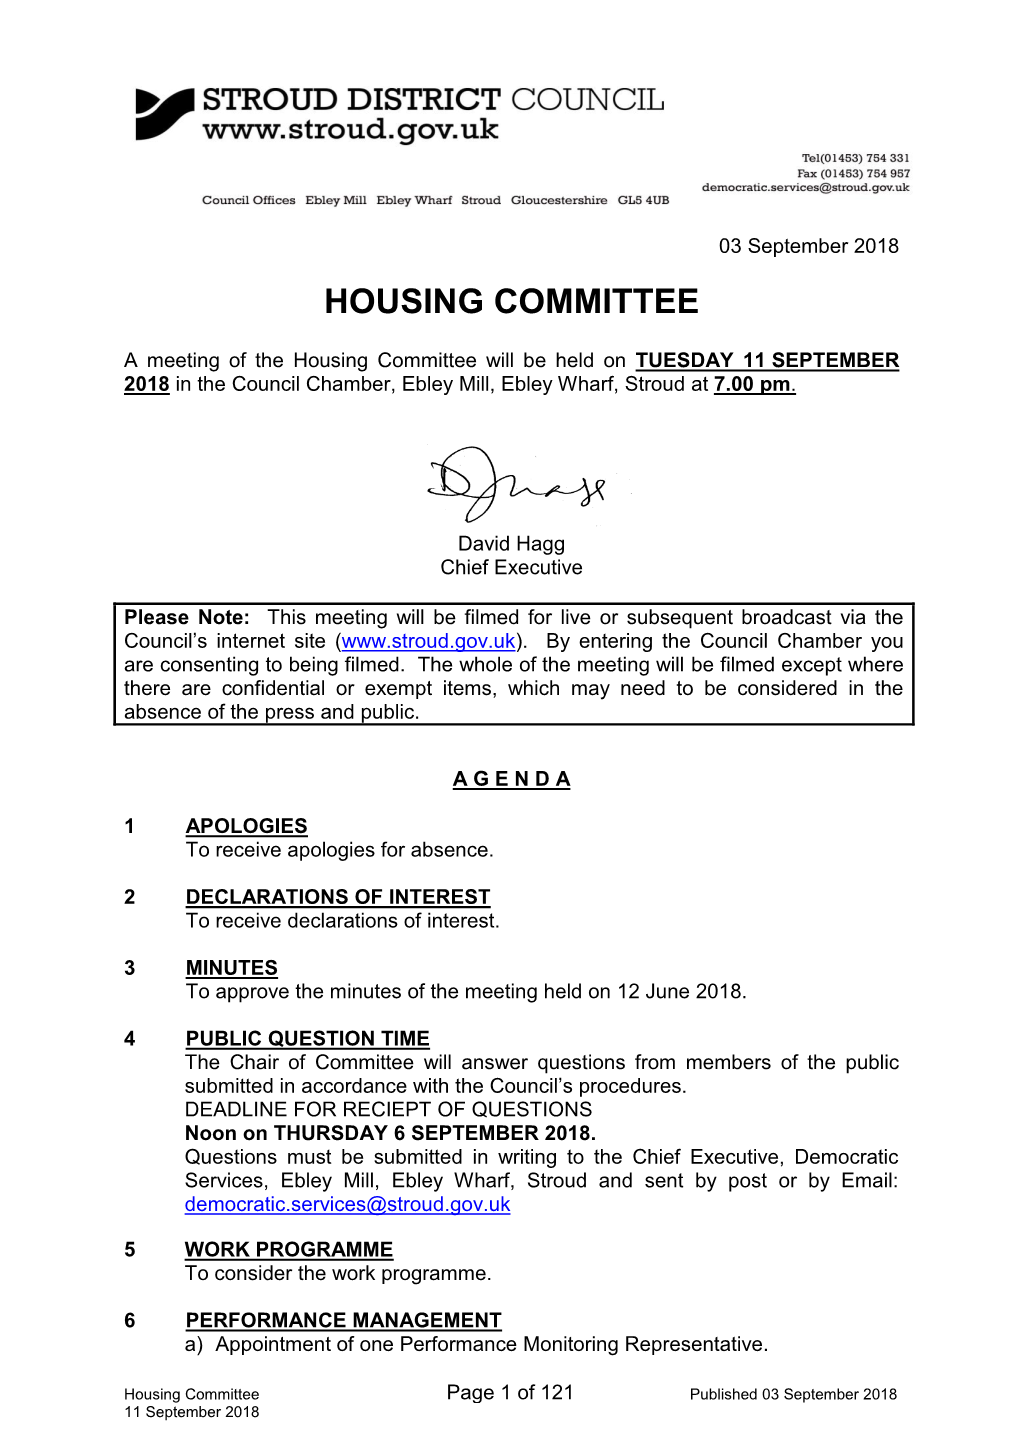 Housing Committee